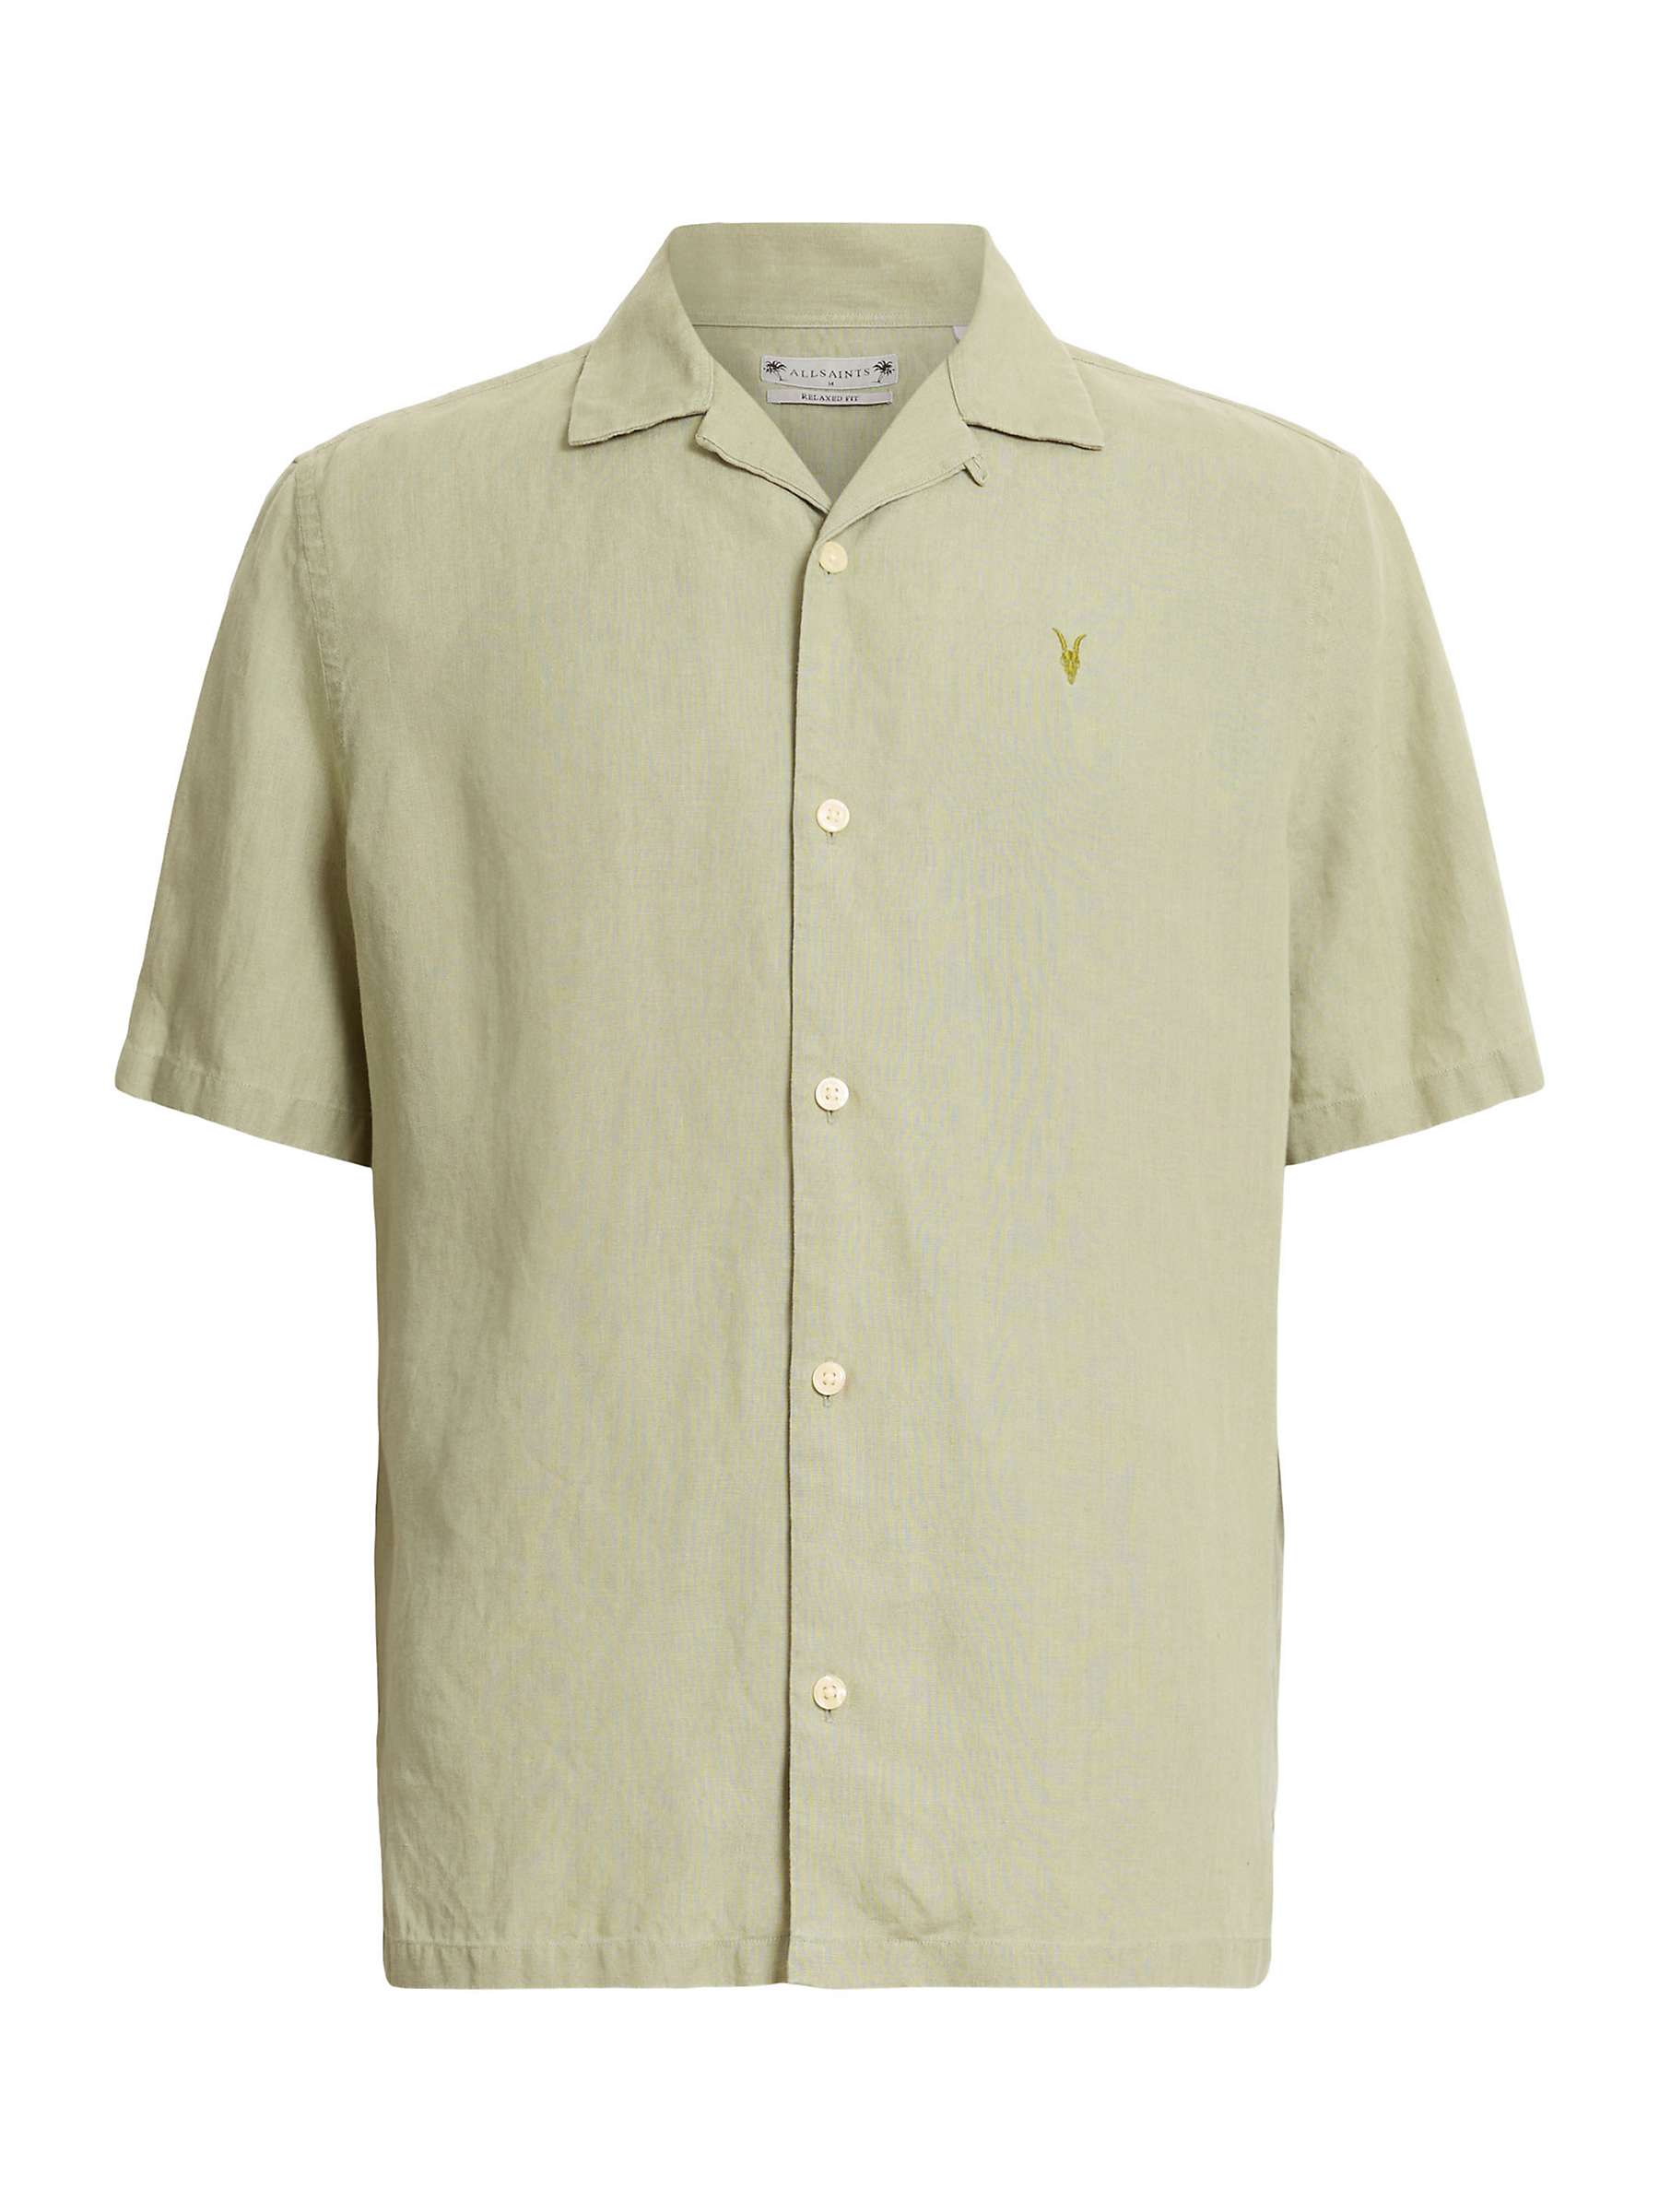 Buy AllSaints Audley Short Sleeve Shirt, Herb Green Online at johnlewis.com